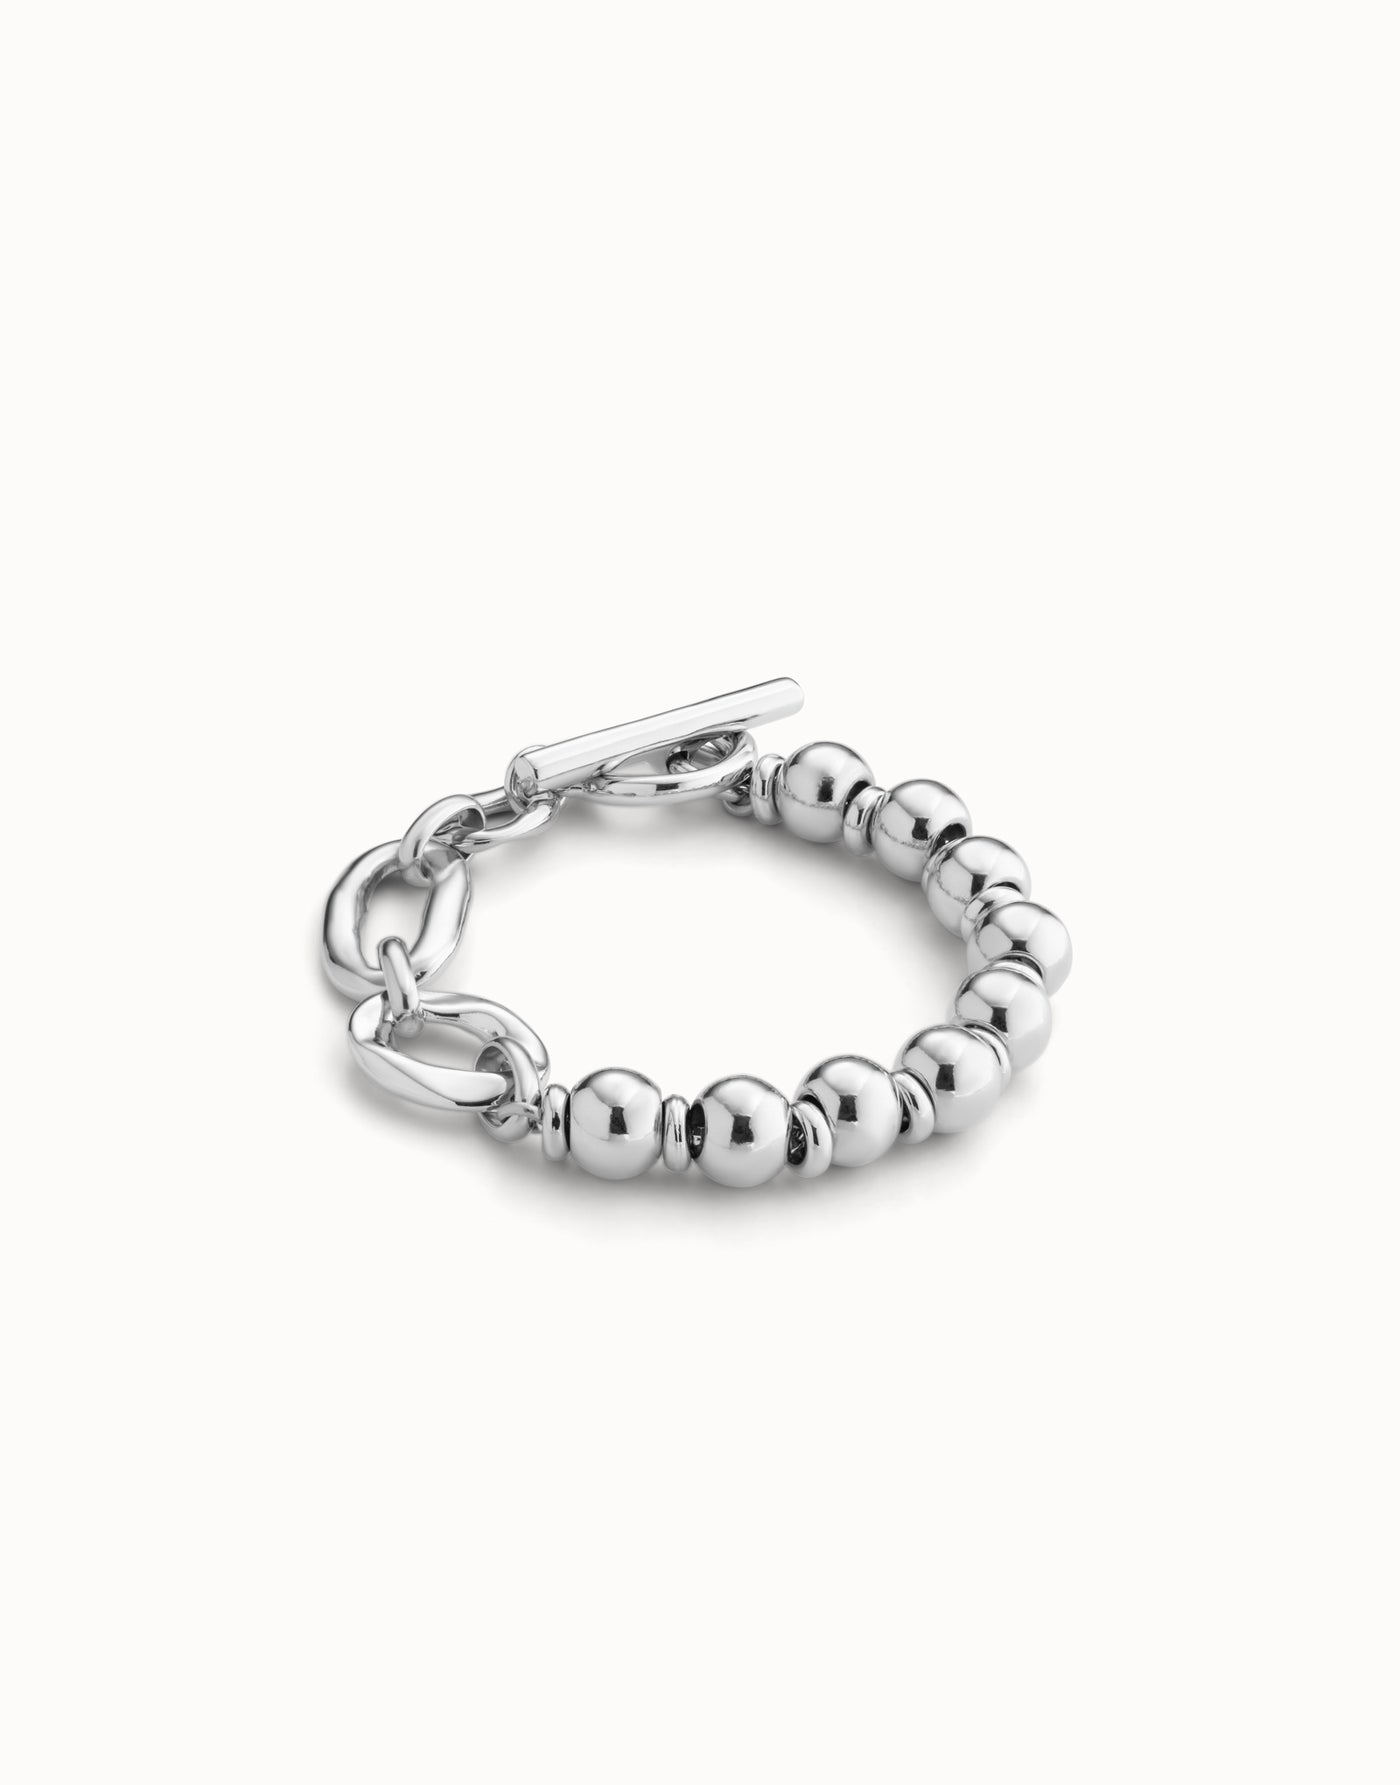 Cheerful Bracelet, Silver